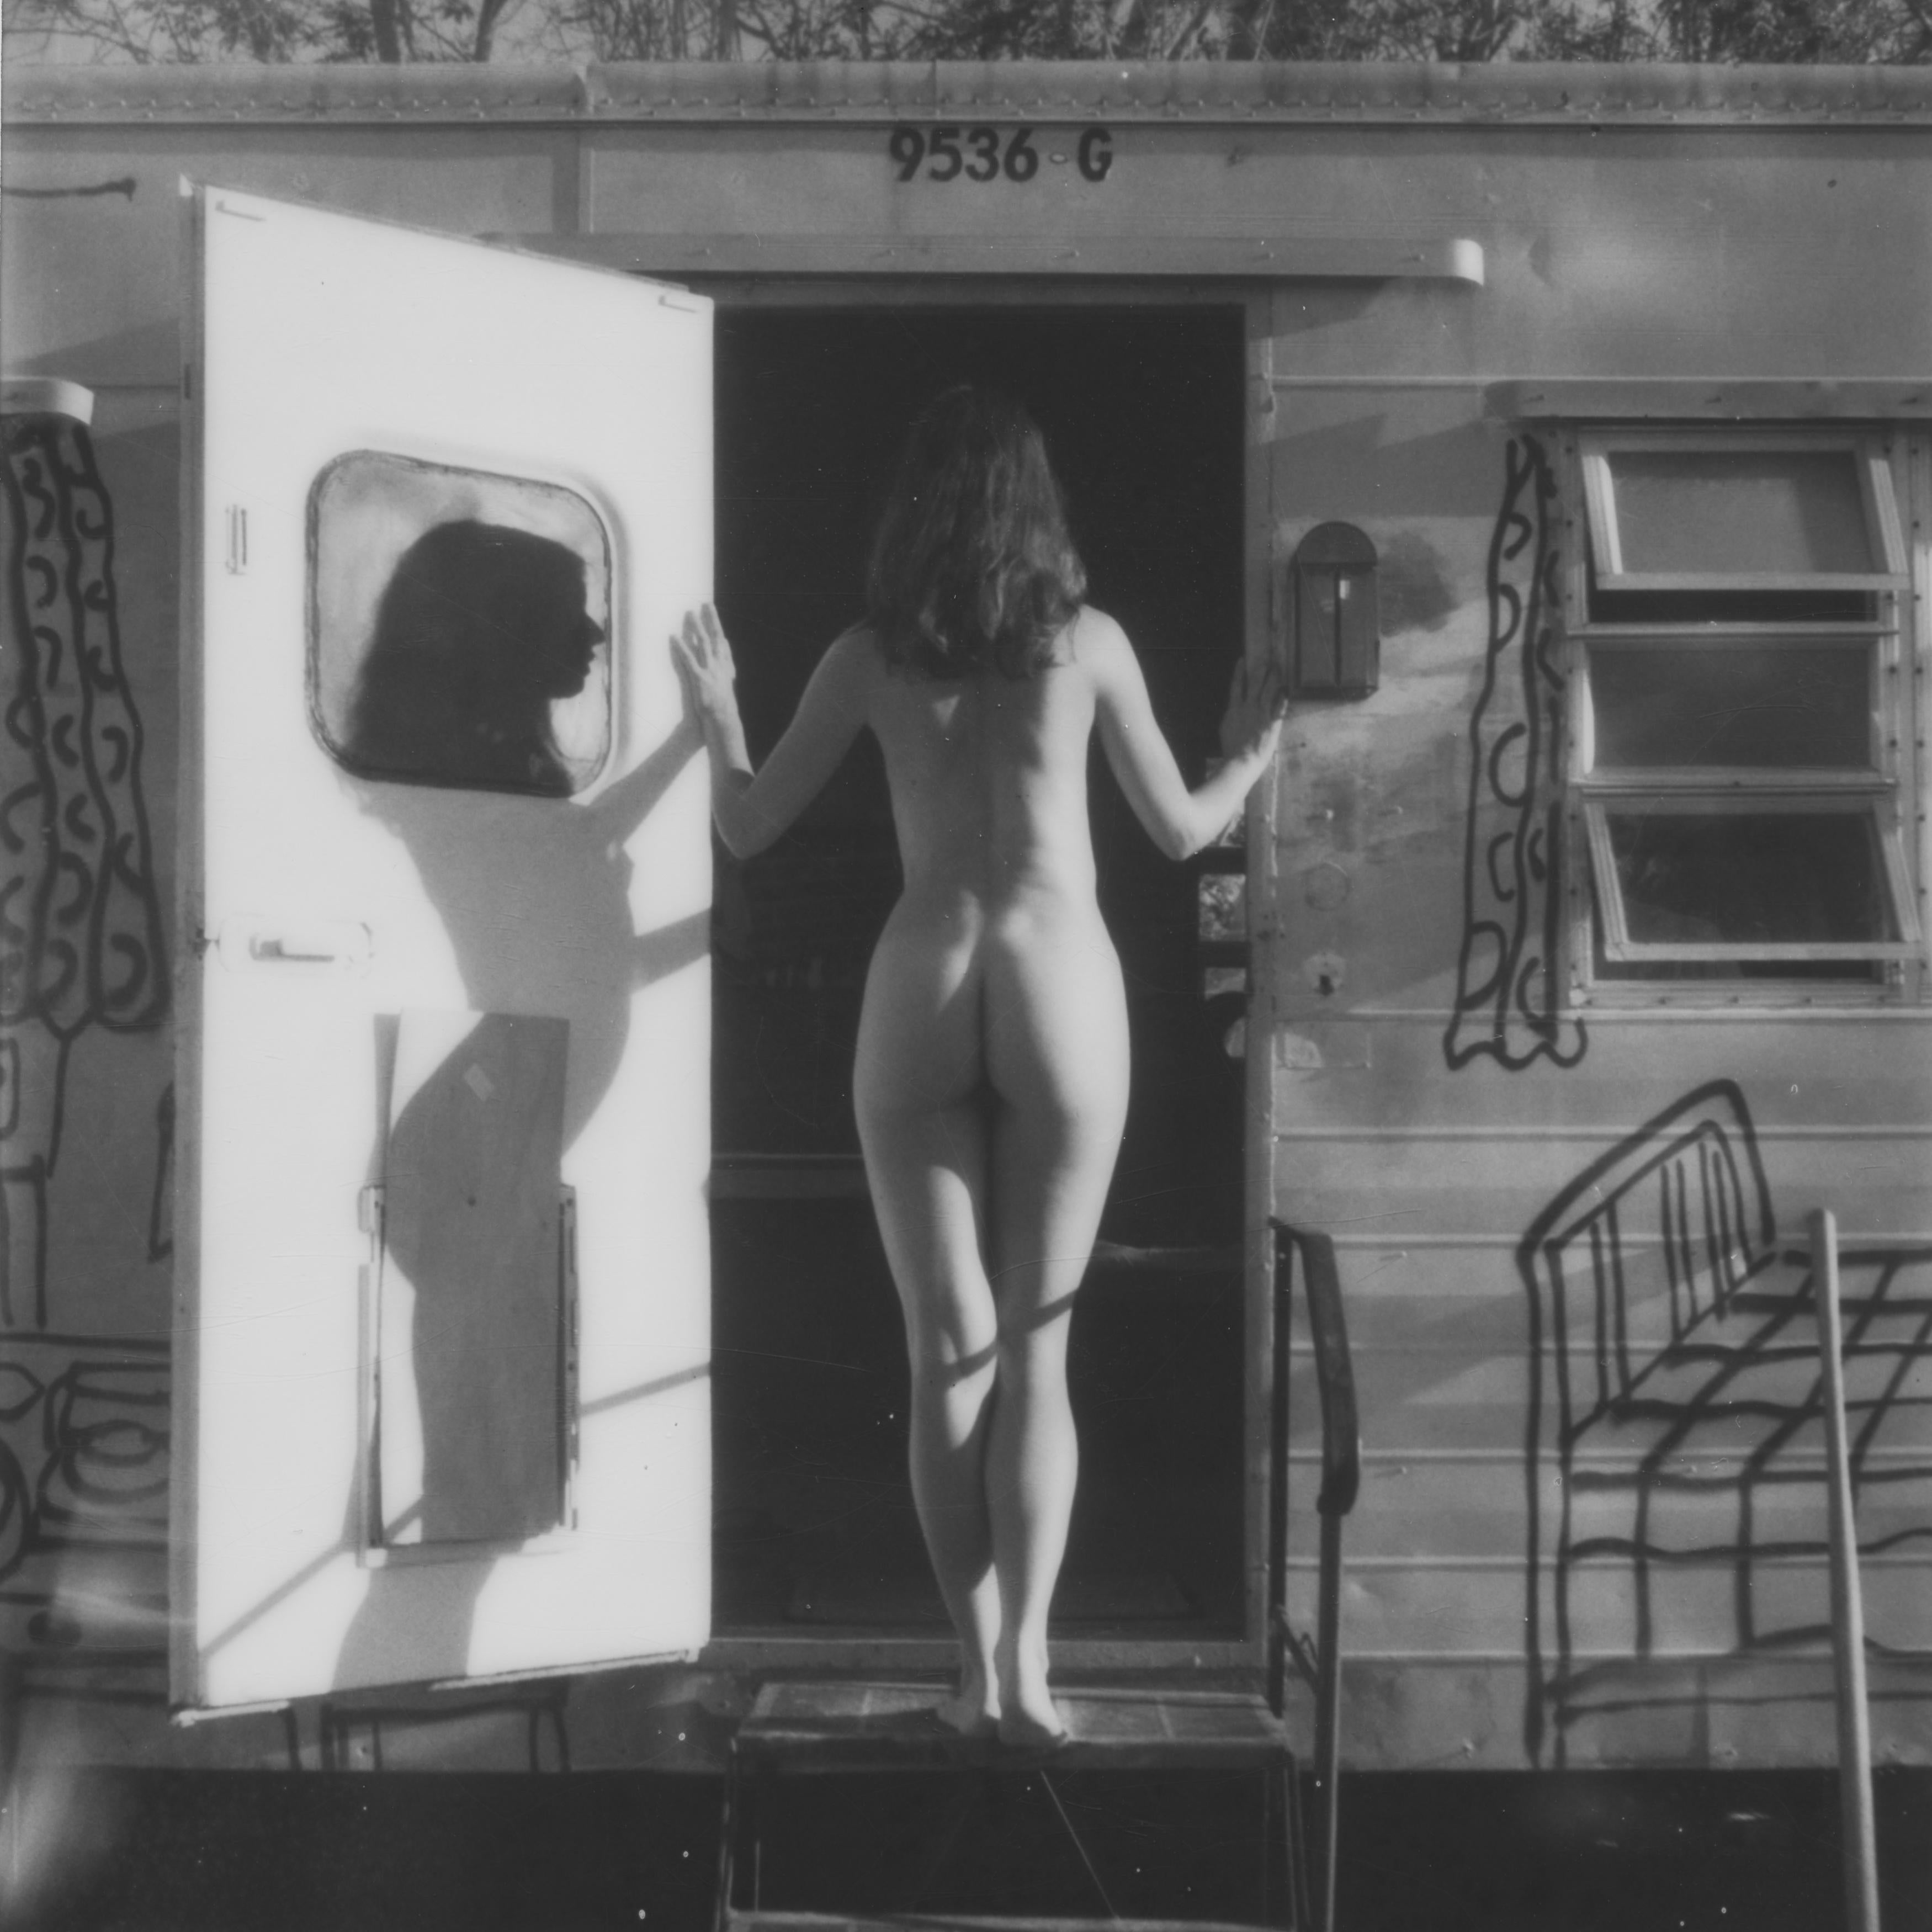 Don't look back (in anger) - Contemporary, Polaroid, Frauen, 21. Jahrhundert